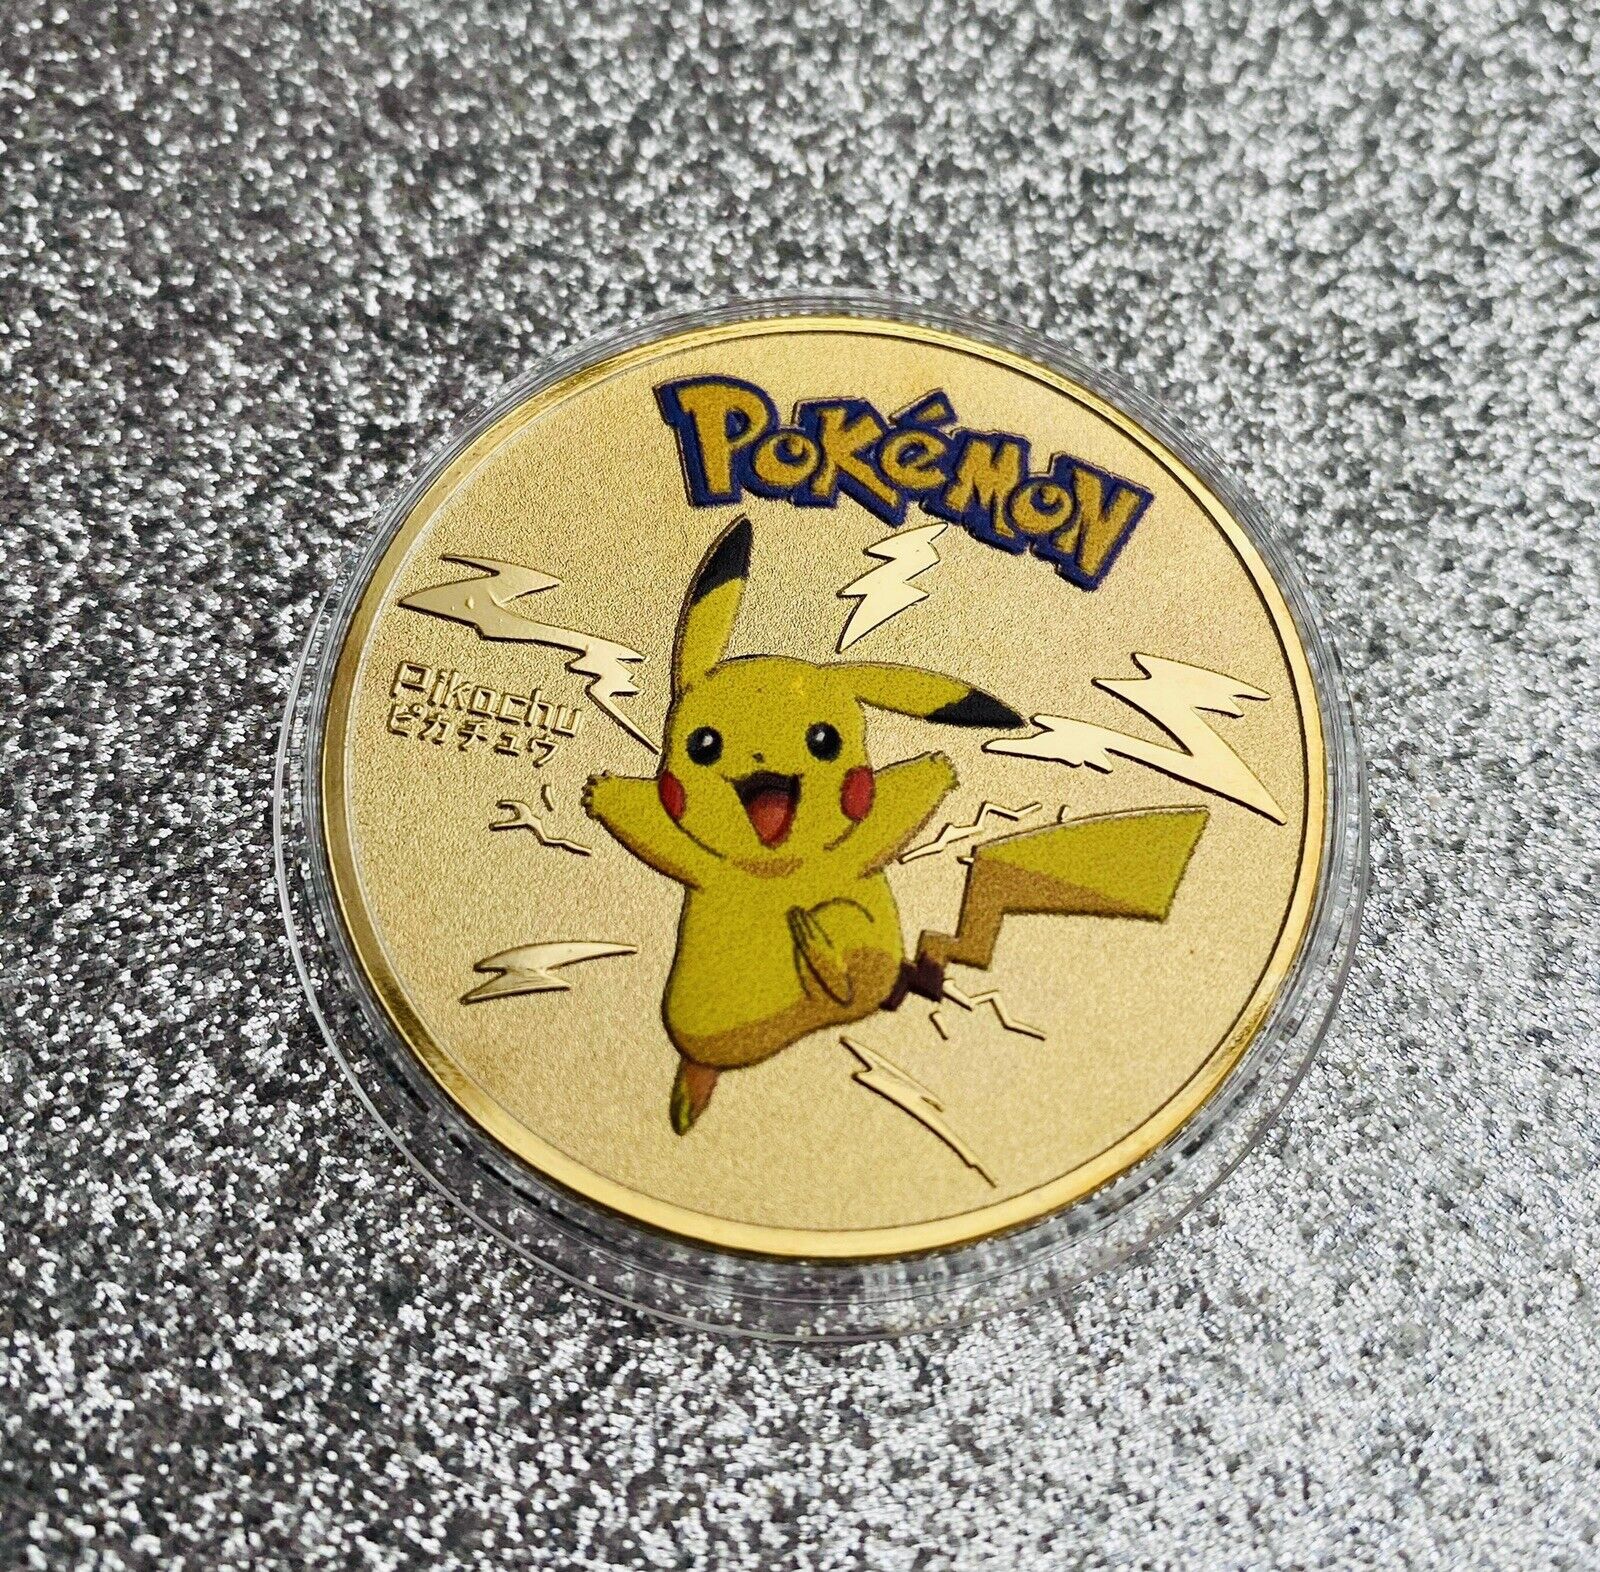 Pokemon Pikachu Gold Collectible Commemorative Coin Gift Rare Pokemon Coin